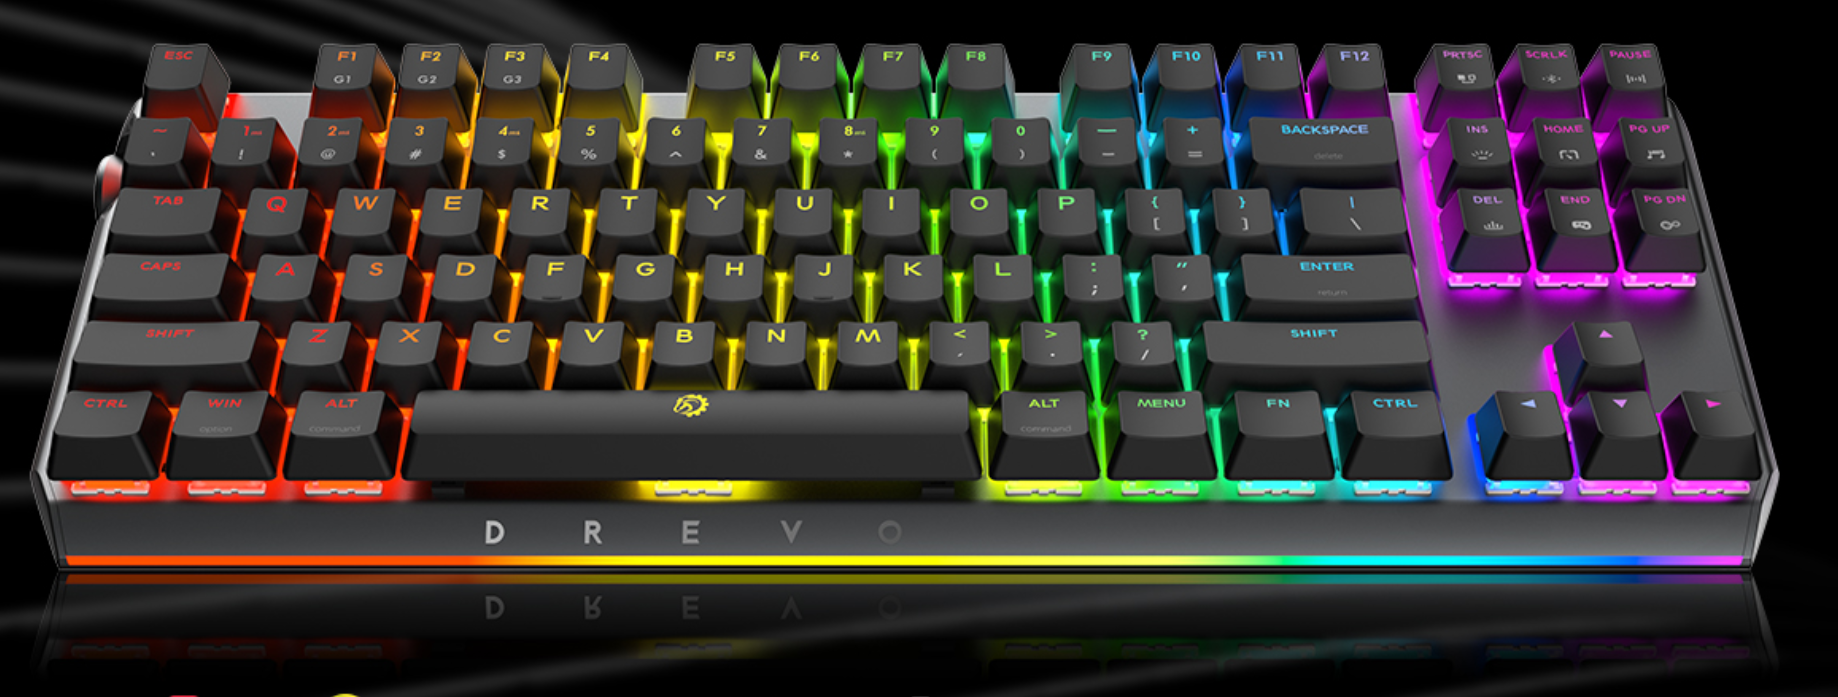 Drevo BladeMaster TE Gaming Mechanical Keyboard